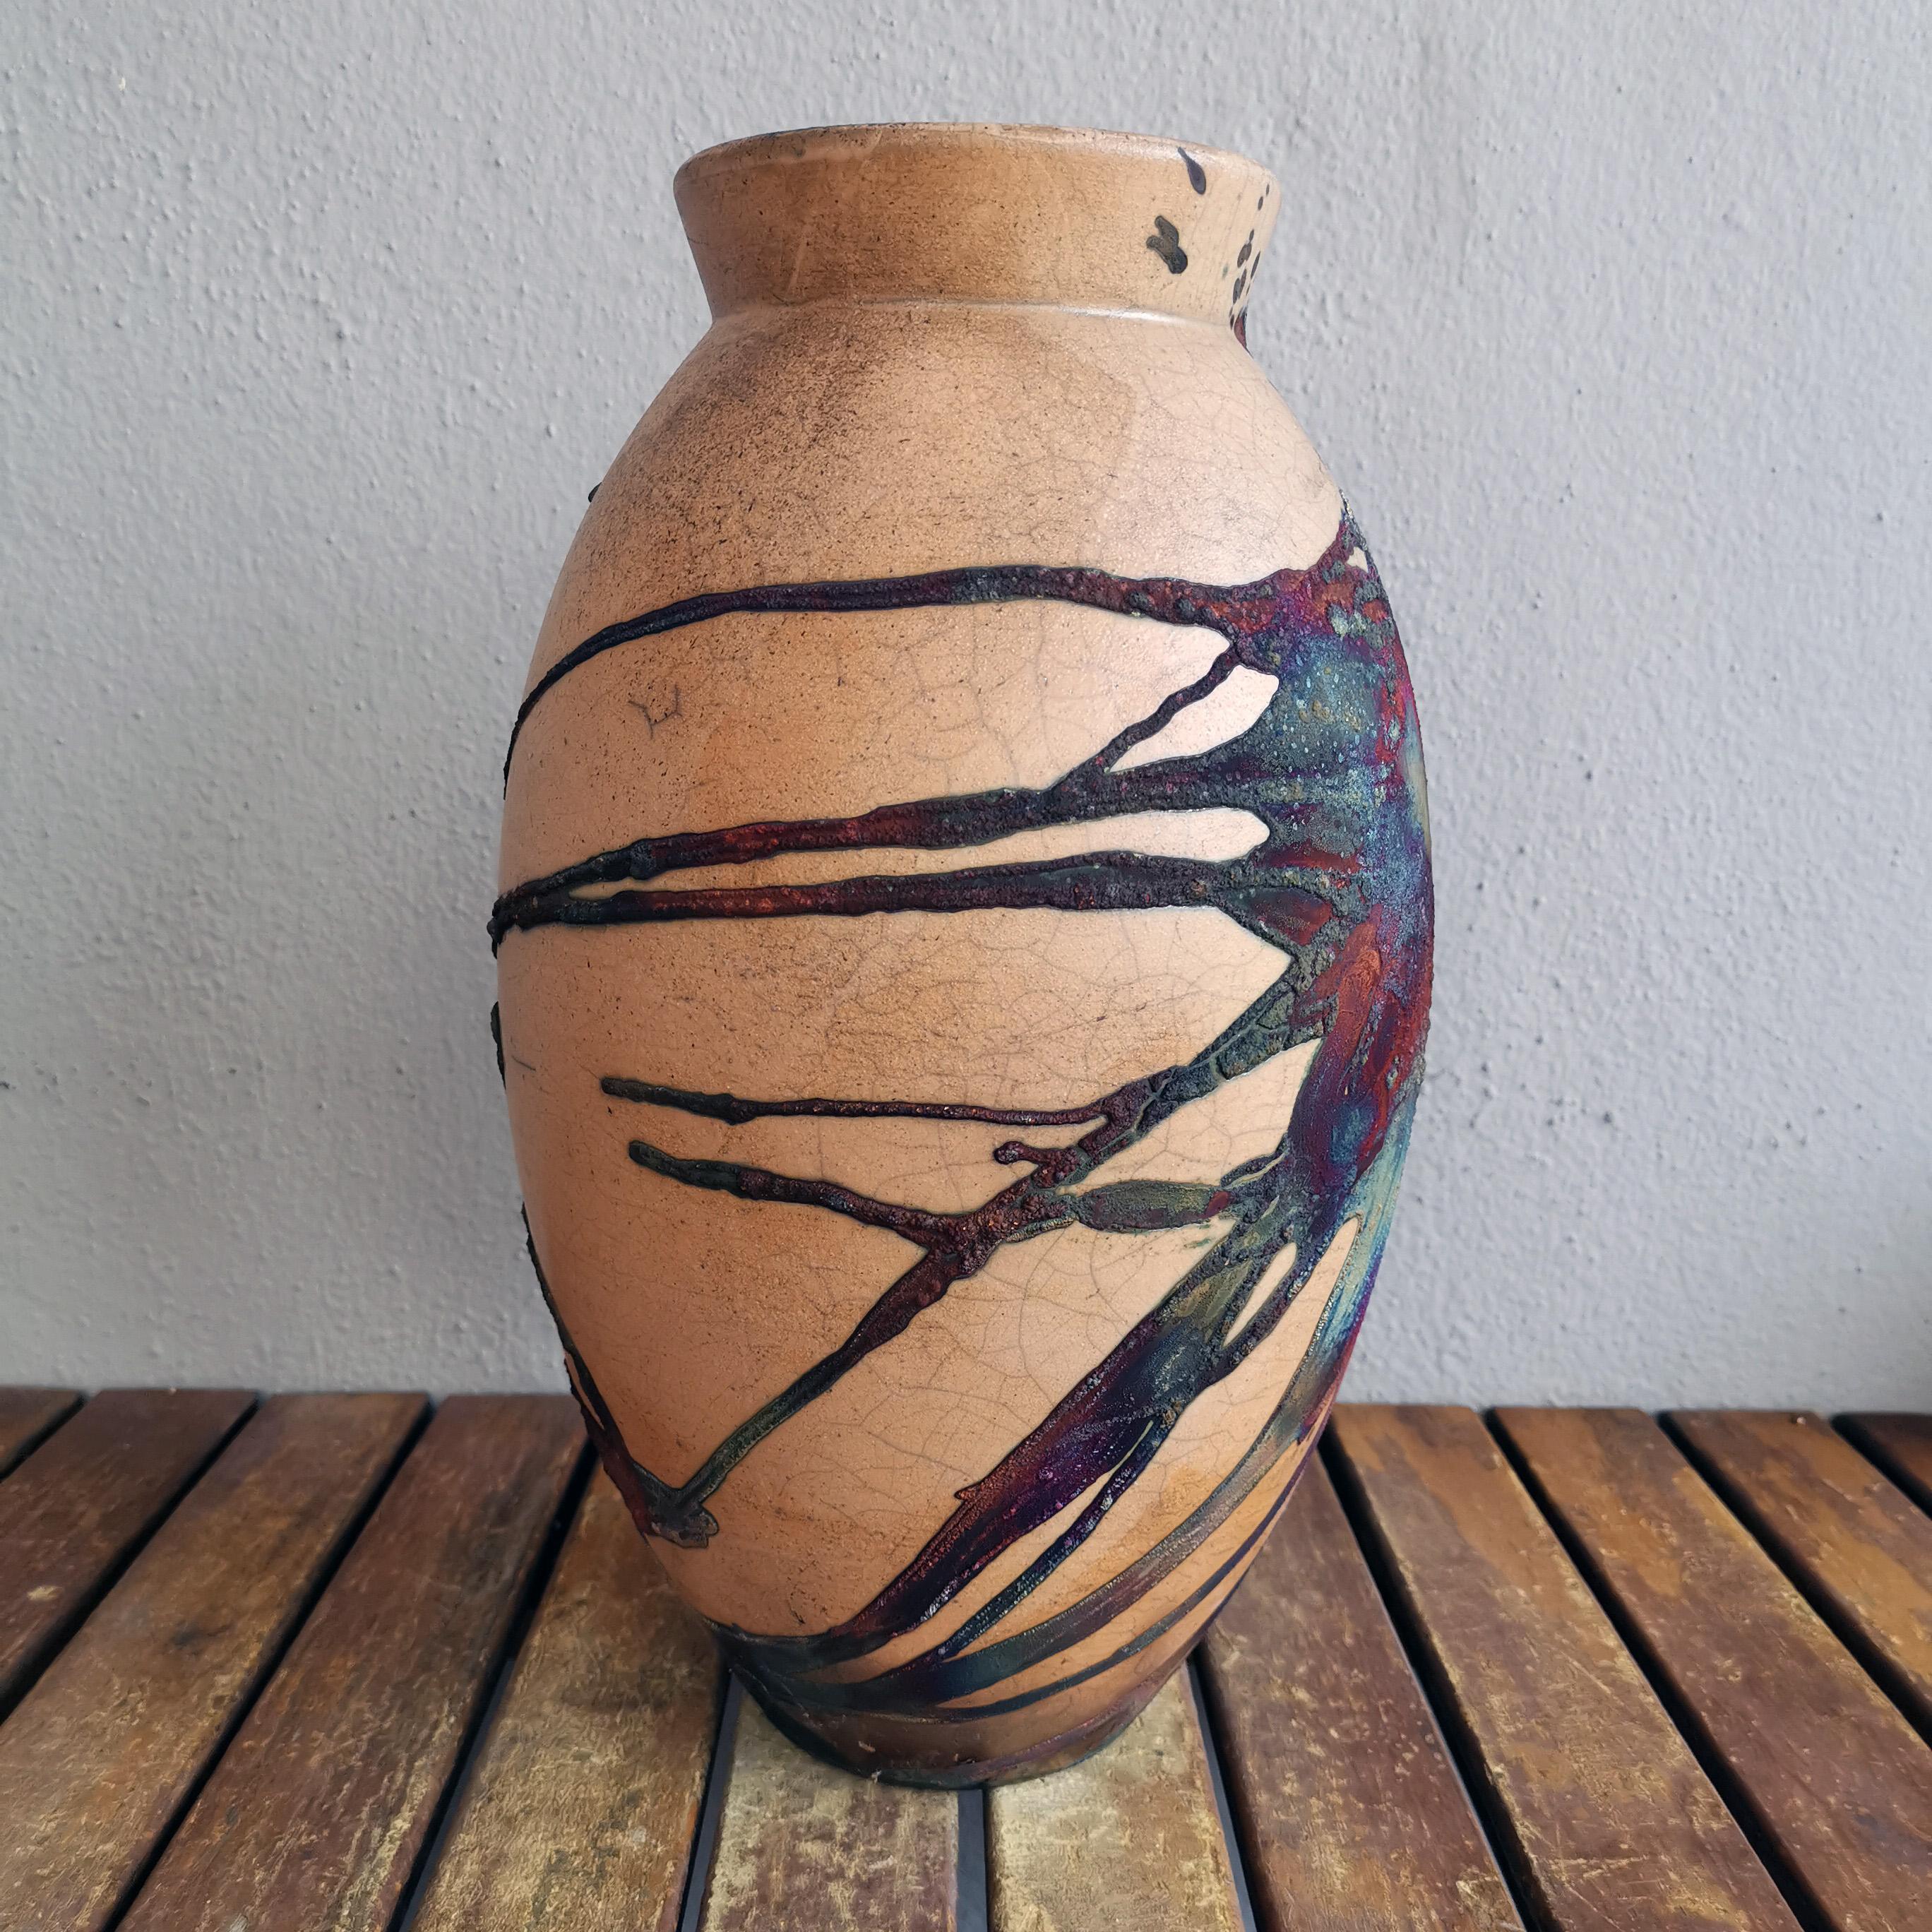 Raaquu Raku Große ovale Vase, geflammt, S/N0000606 Tafelaufsatz, Kunstserie (Moderne)